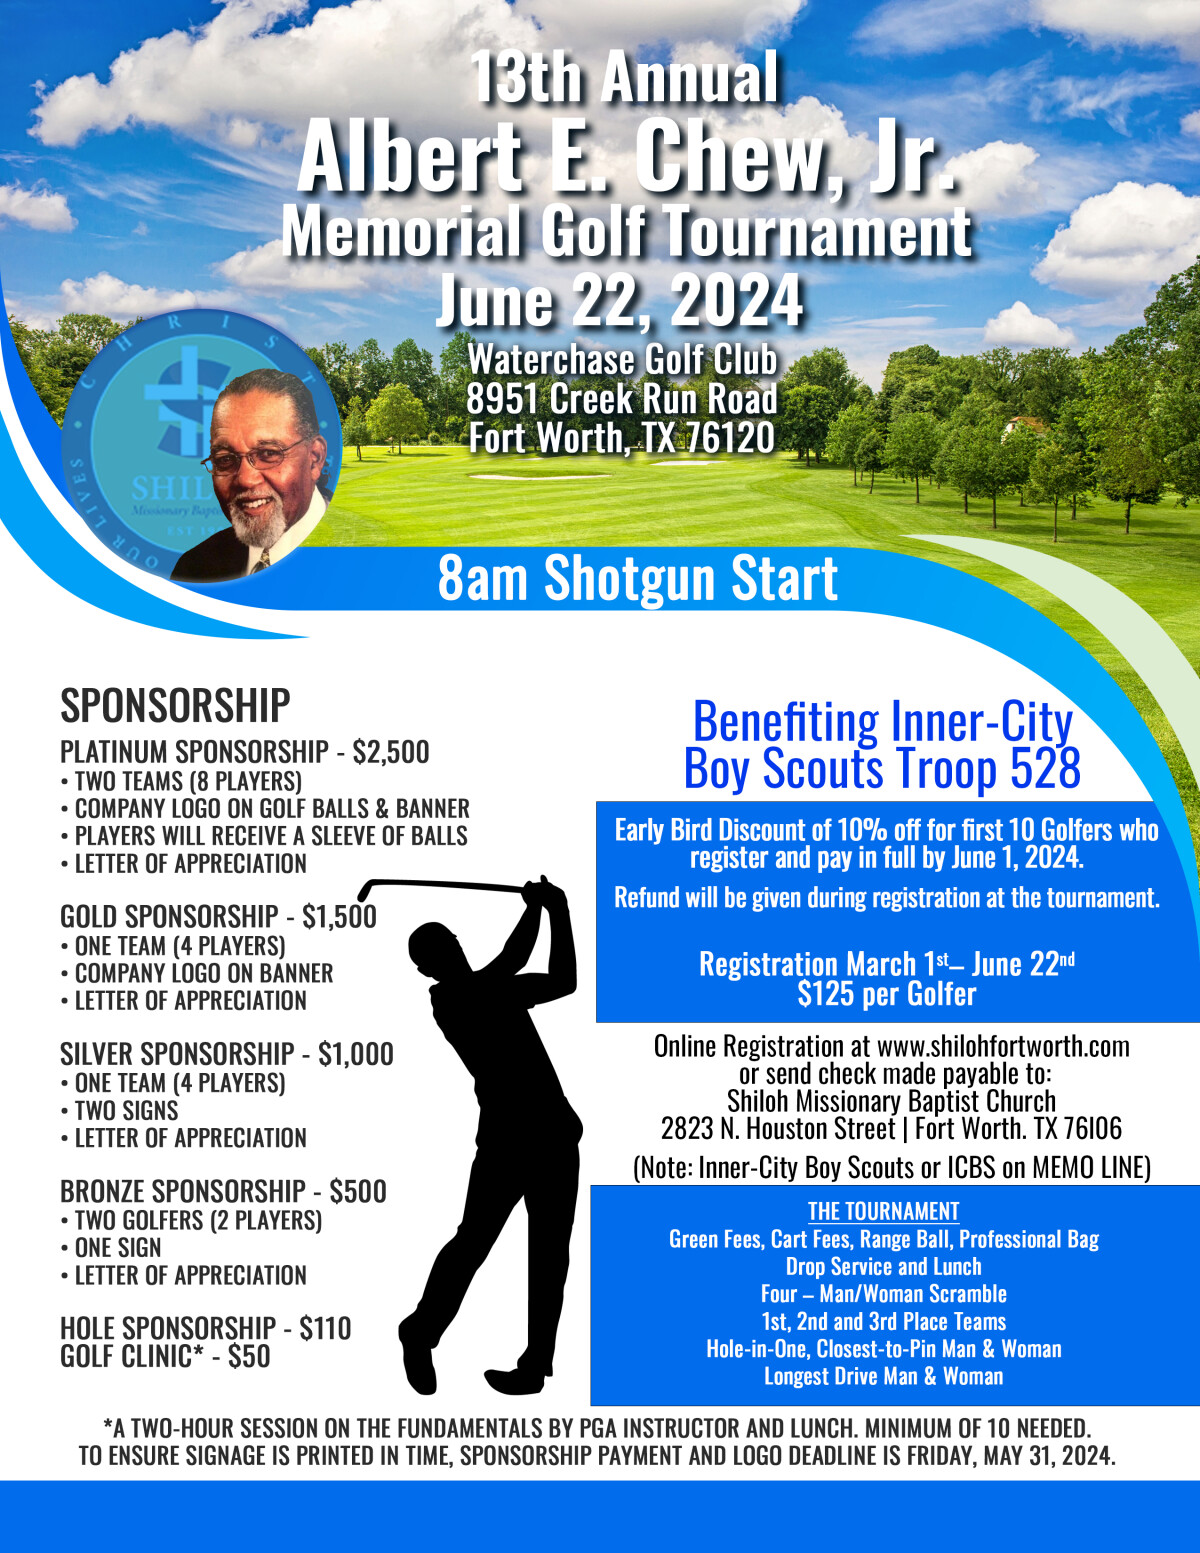 13th Annual Albert E. Chew, Jr. Memorial Golf Tournament